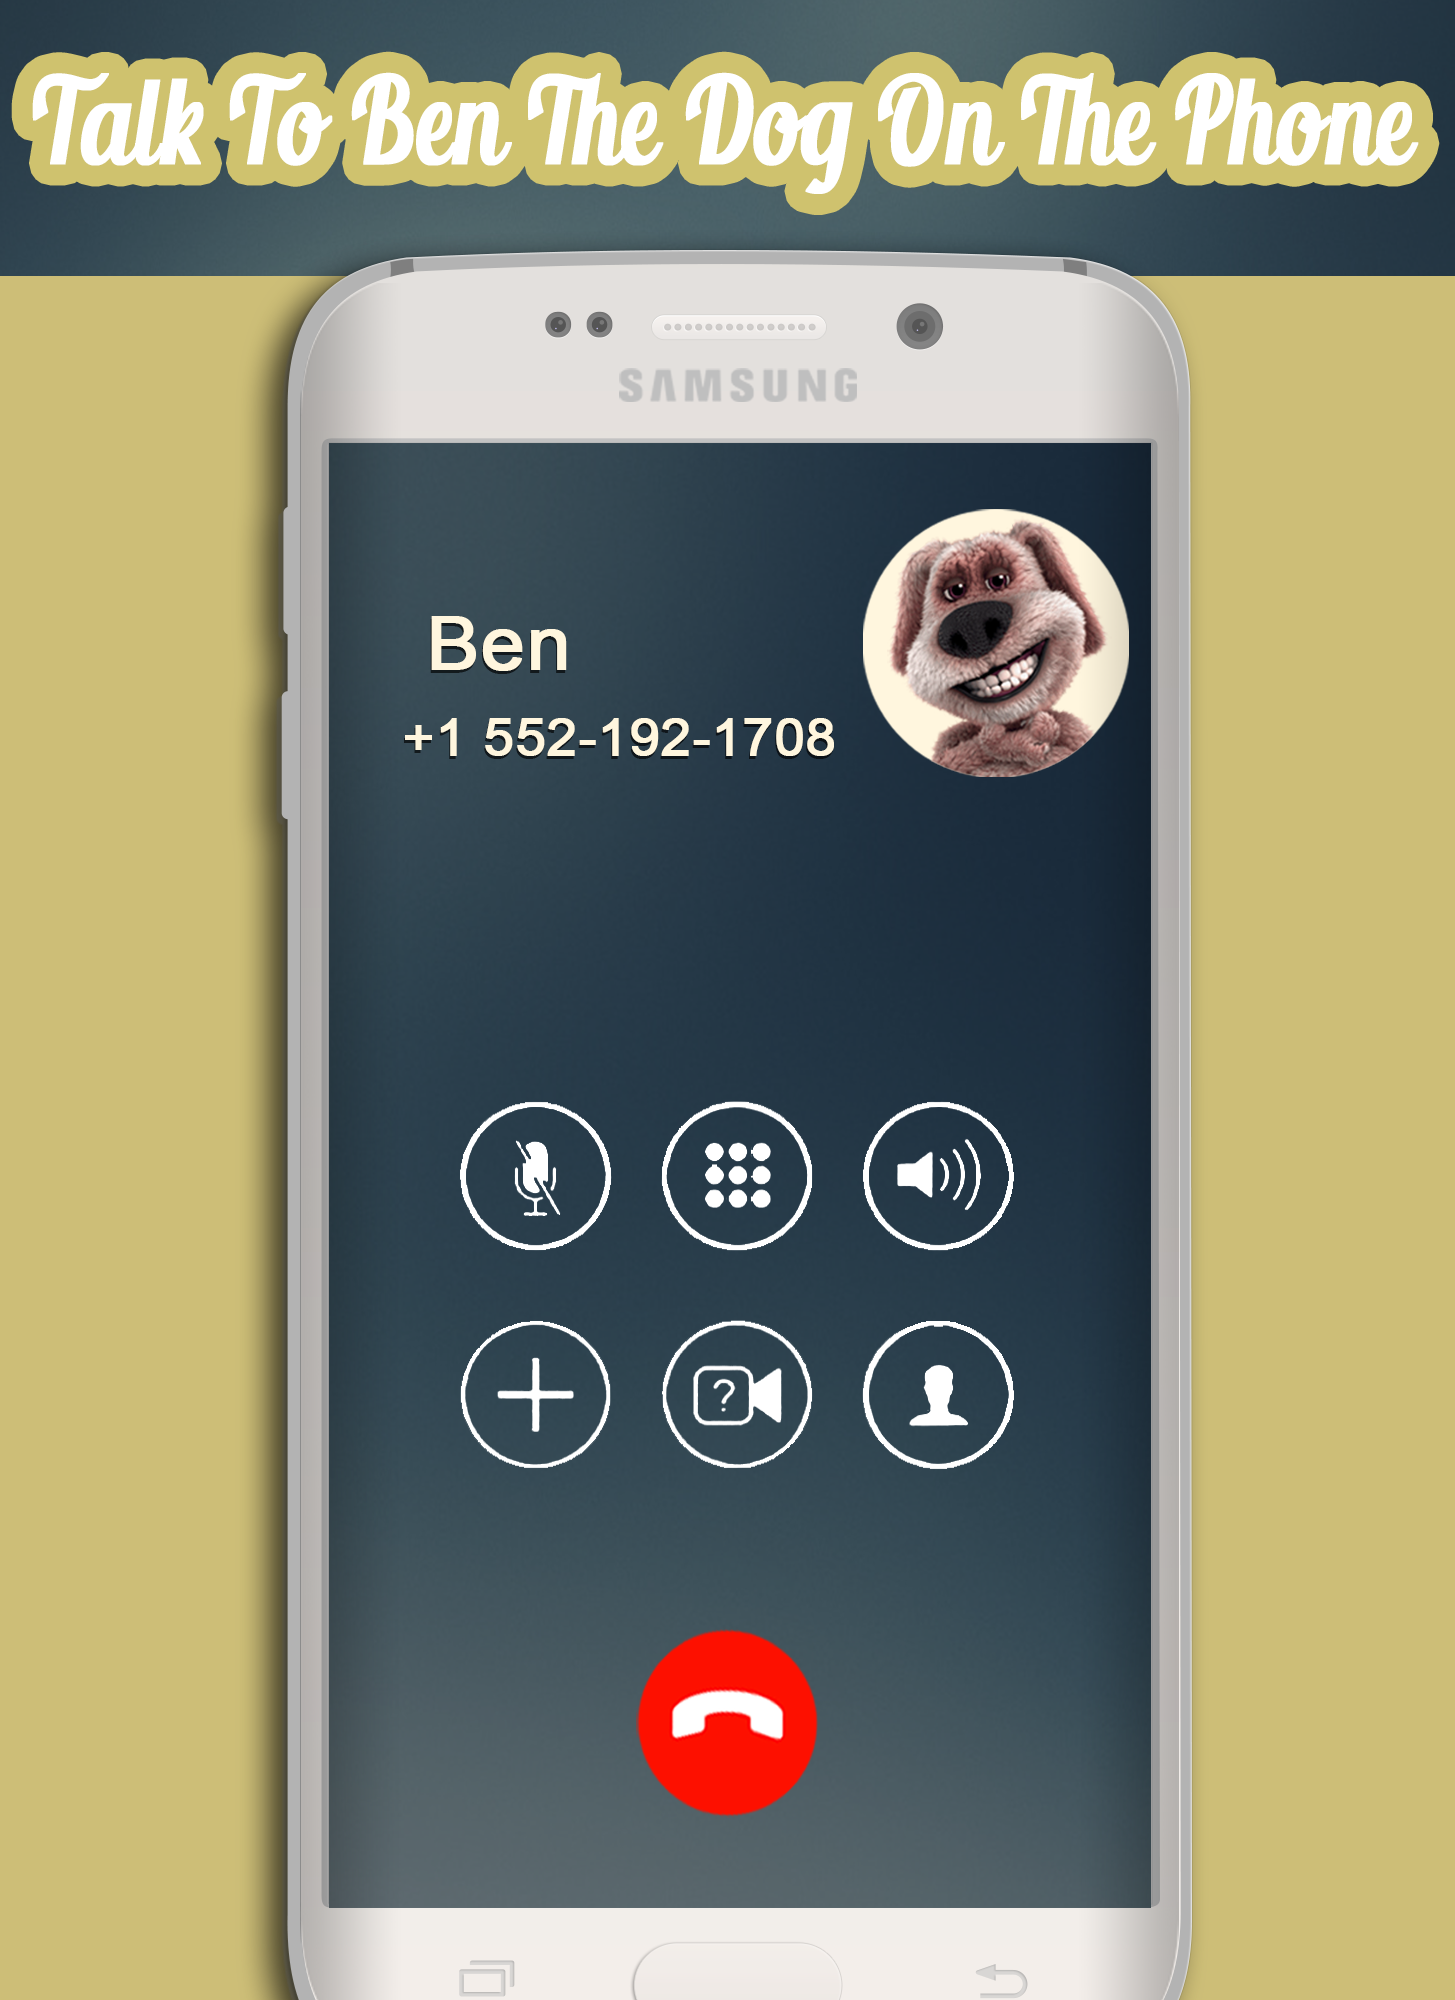 Call From Talking Ben Dogのキャプチャ